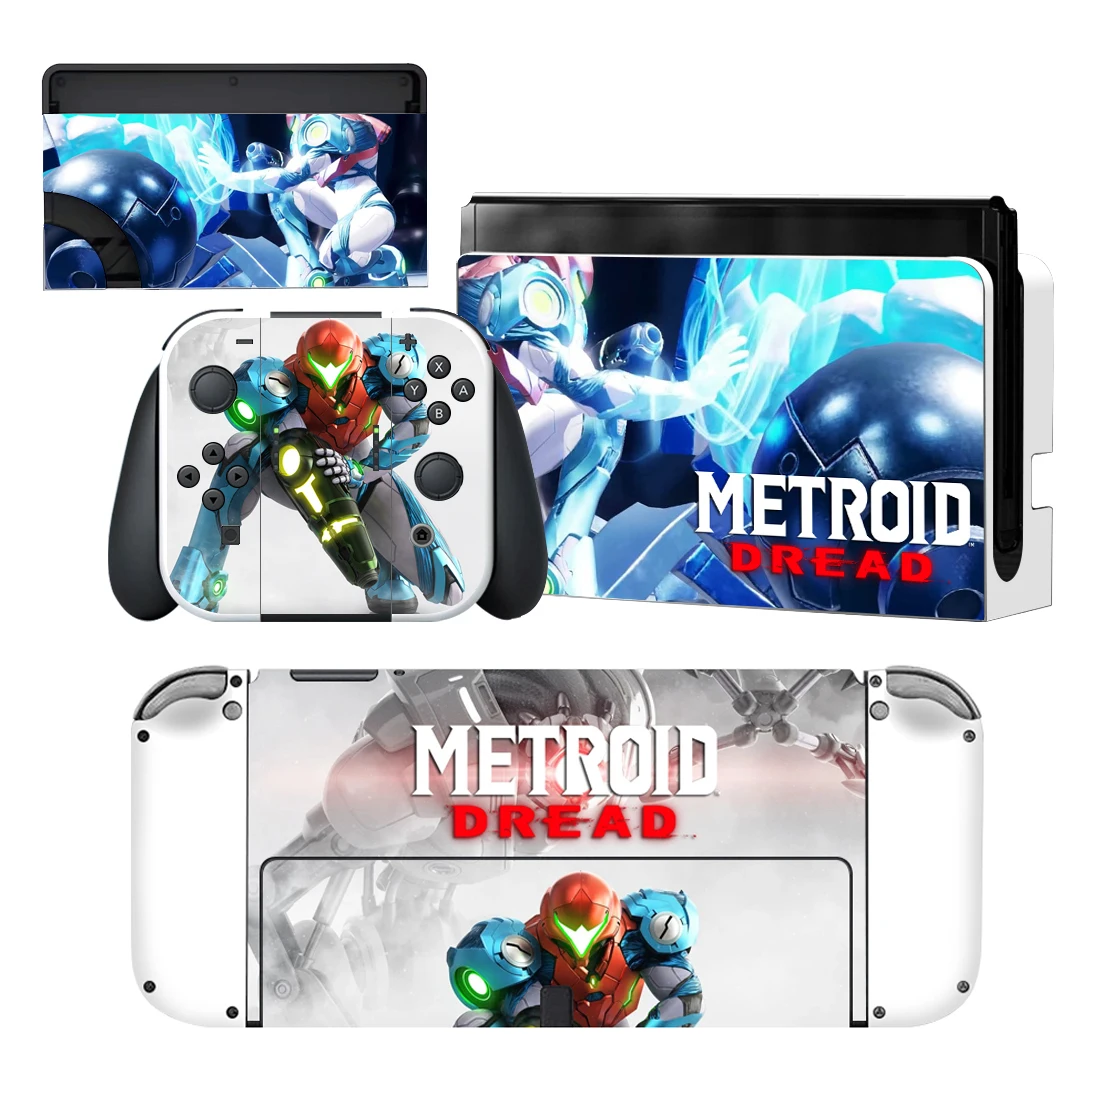 Metroid Dread Nintendoswitch Skin Cover Стикер Стикер за Nintendo Switch OLED Конзола Joy-con Контролер Докинг Станция Кожа Винил 1